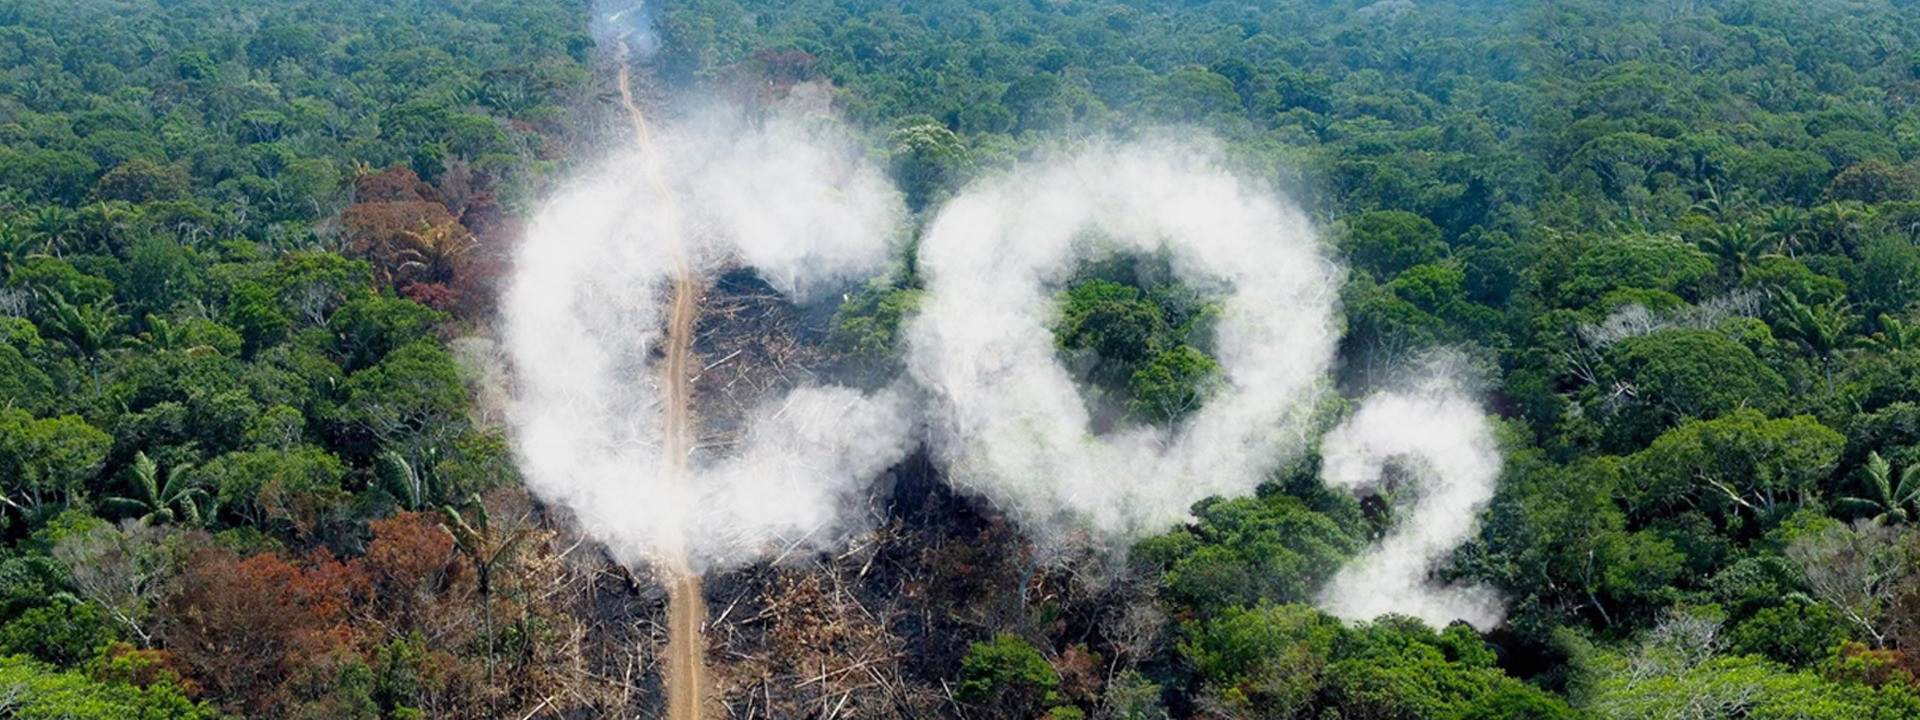 The Amazon: beyond carbon